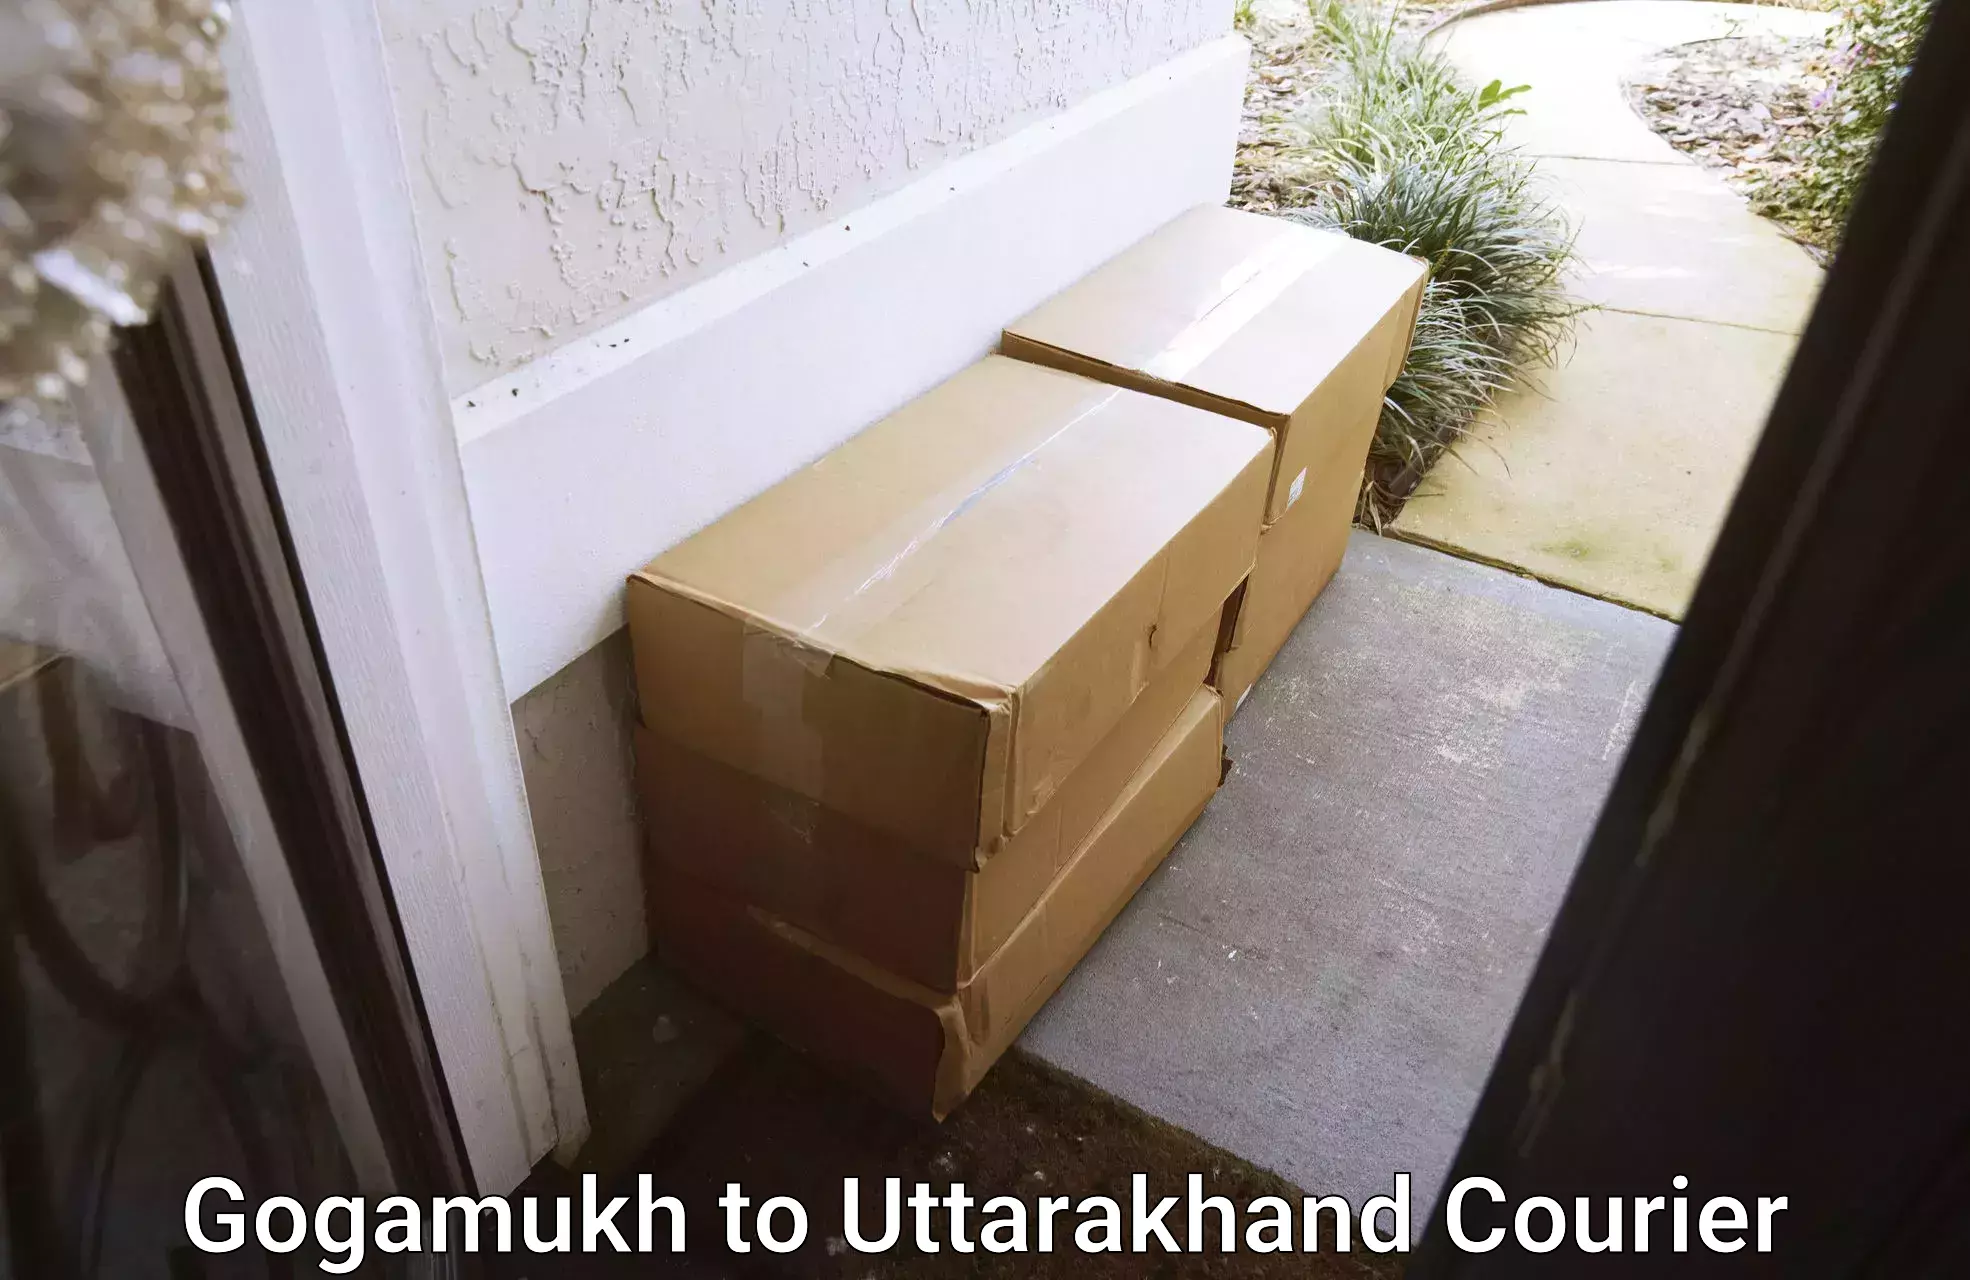 Courier service comparison Gogamukh to Rudrapur